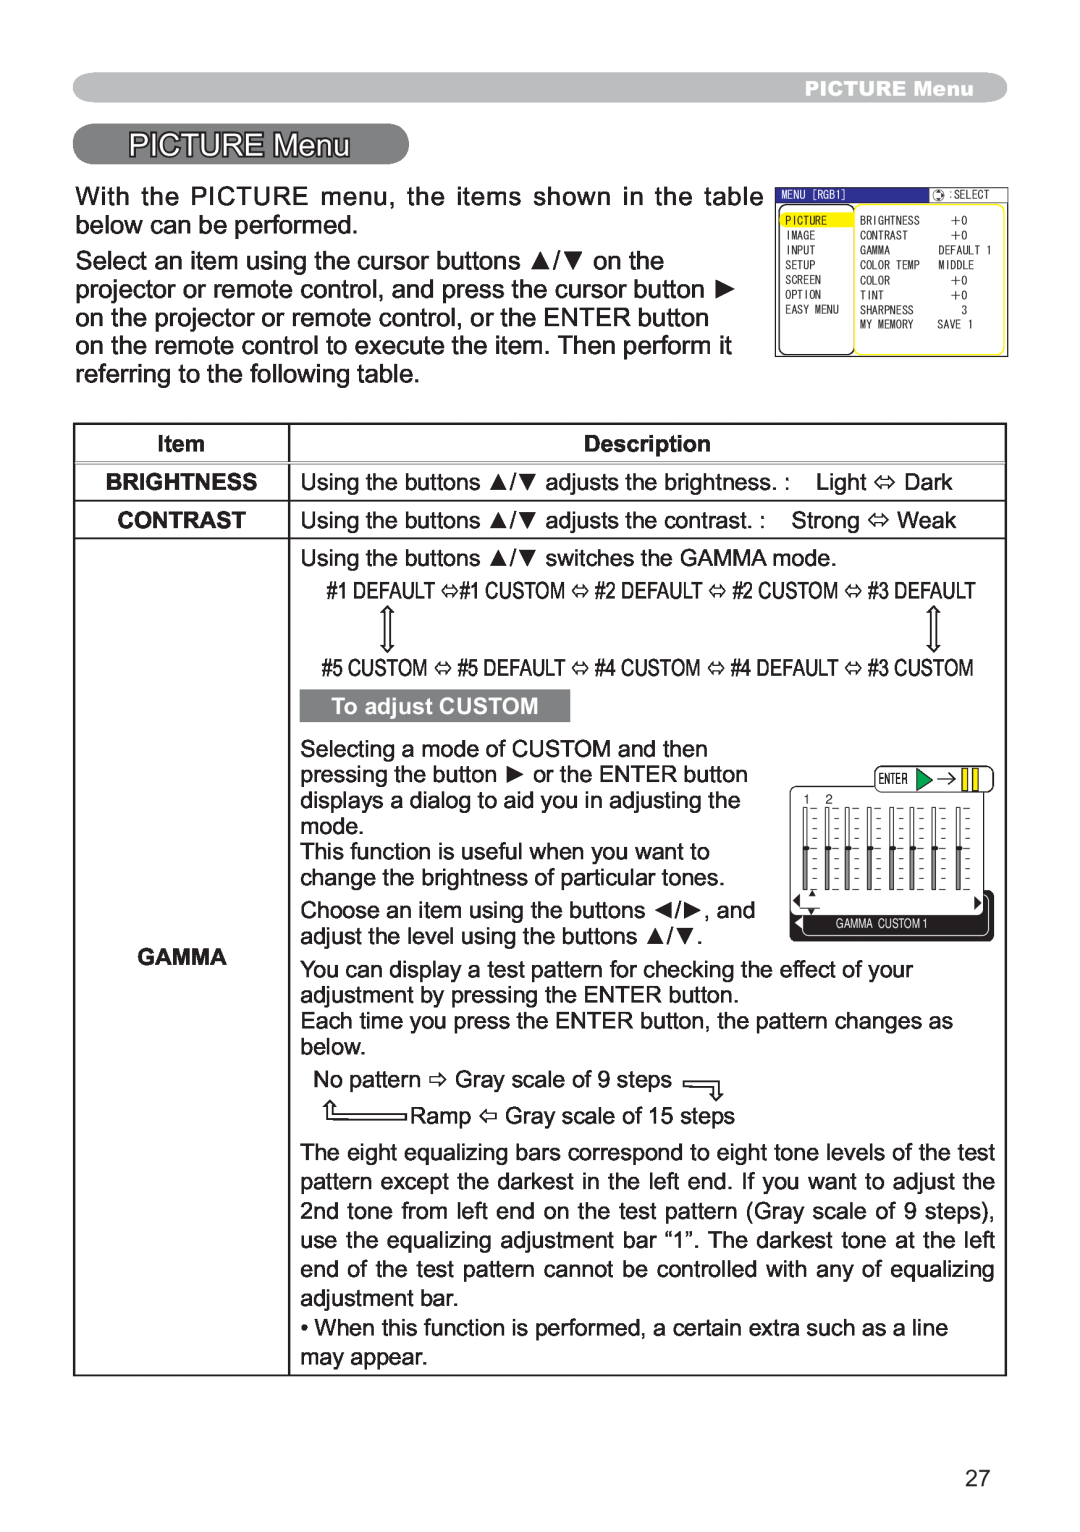 Hitachi ED-X12 user manual PICTURE Menu, Item, Description, Brightness, Contrast, To adjust CUSTOM, Gamma 